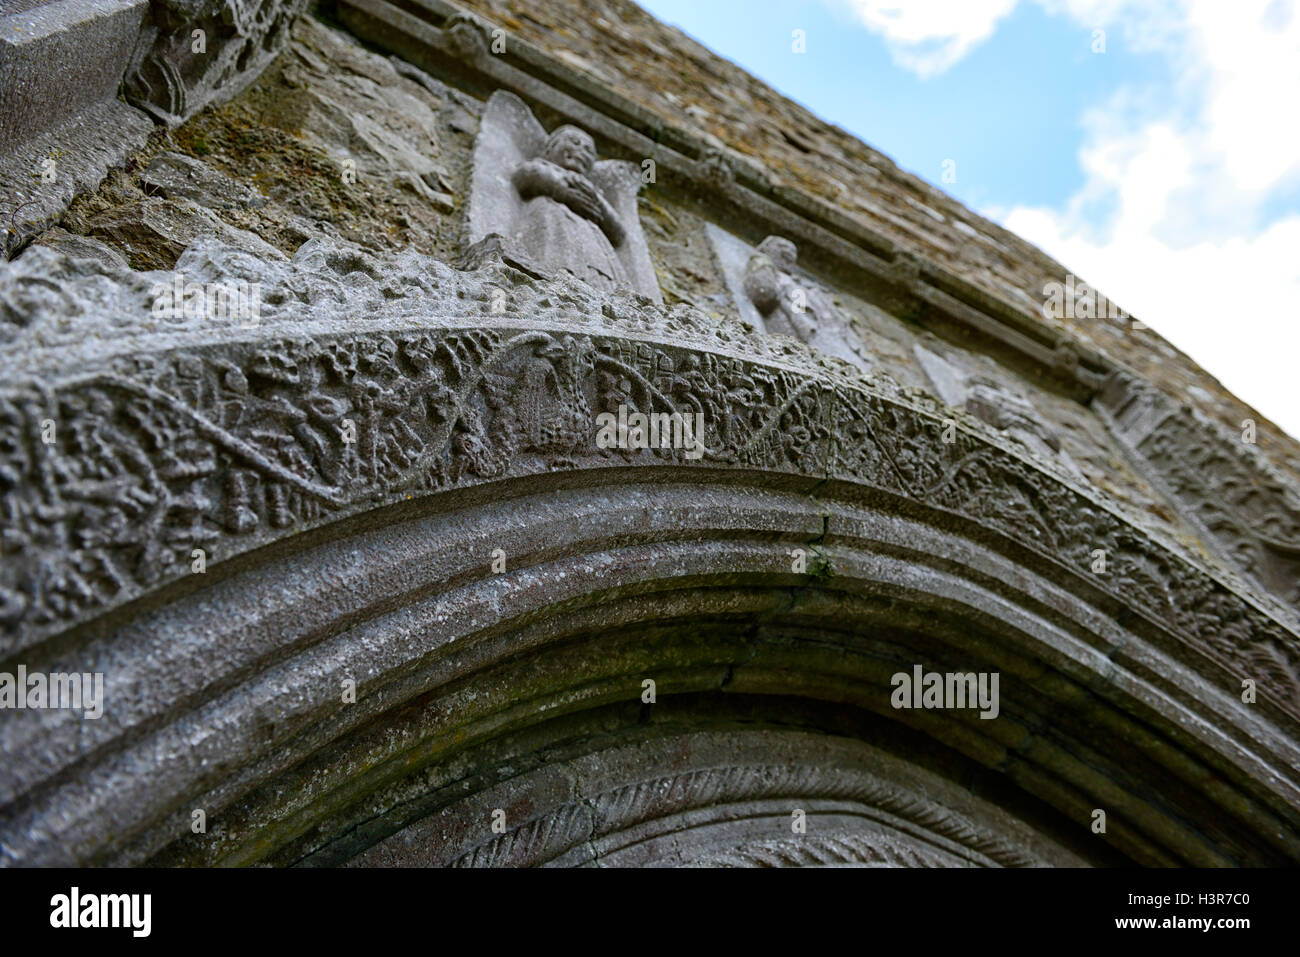 Clonmacnoise ornate stone doorway arch monastic settlement carved stone monument religion religious Monastery Offaly RM Ireland Stock Photo